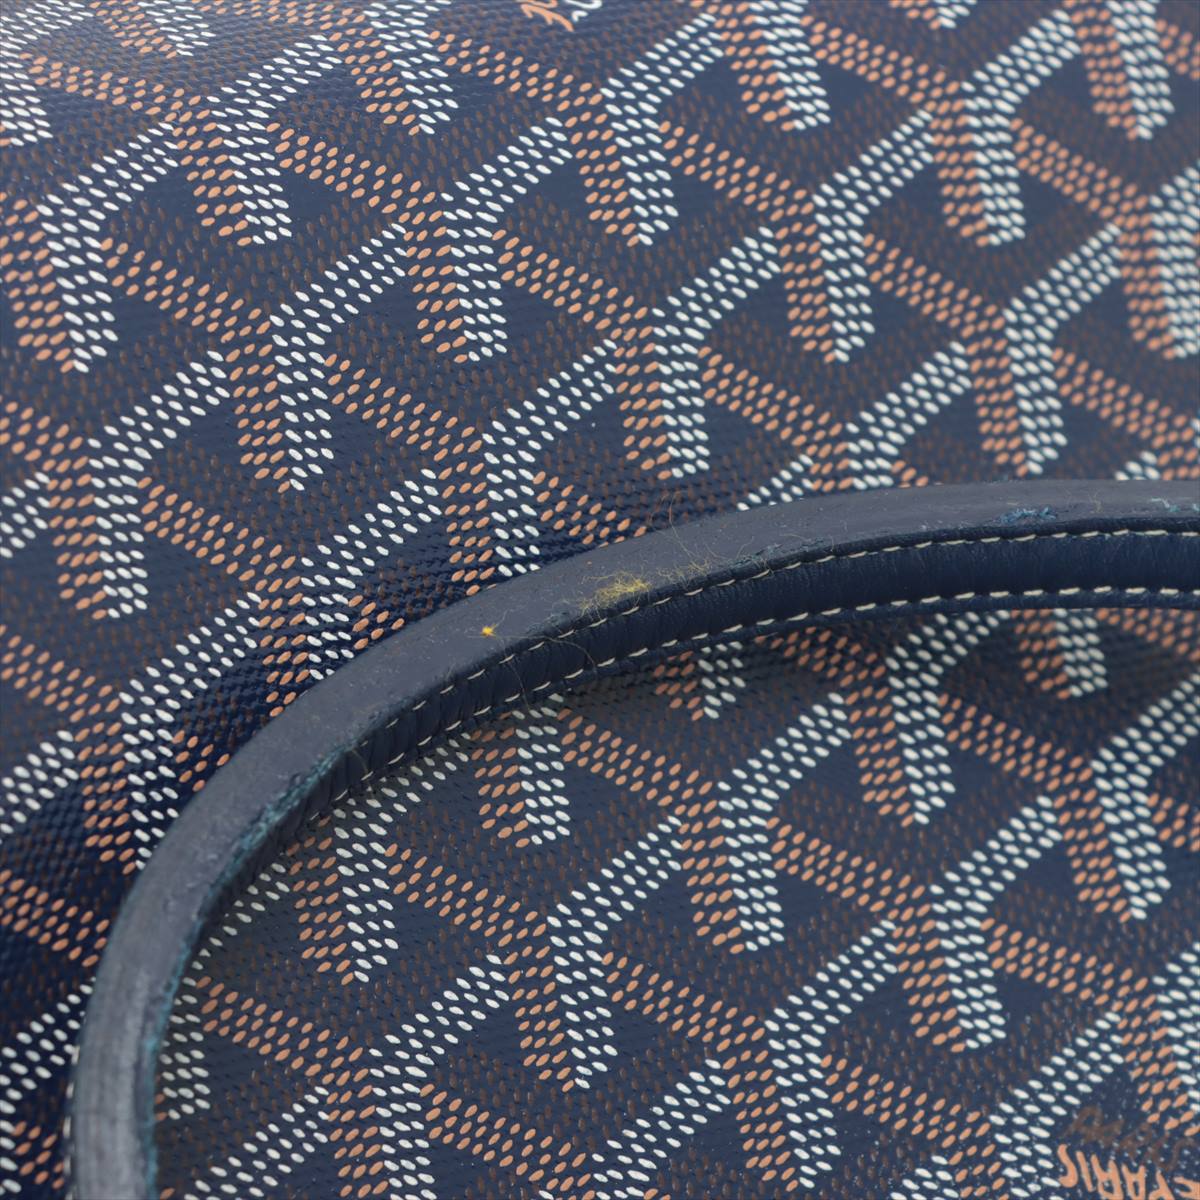 Artois leather handbag Goyard Navy in Leather - 32803928